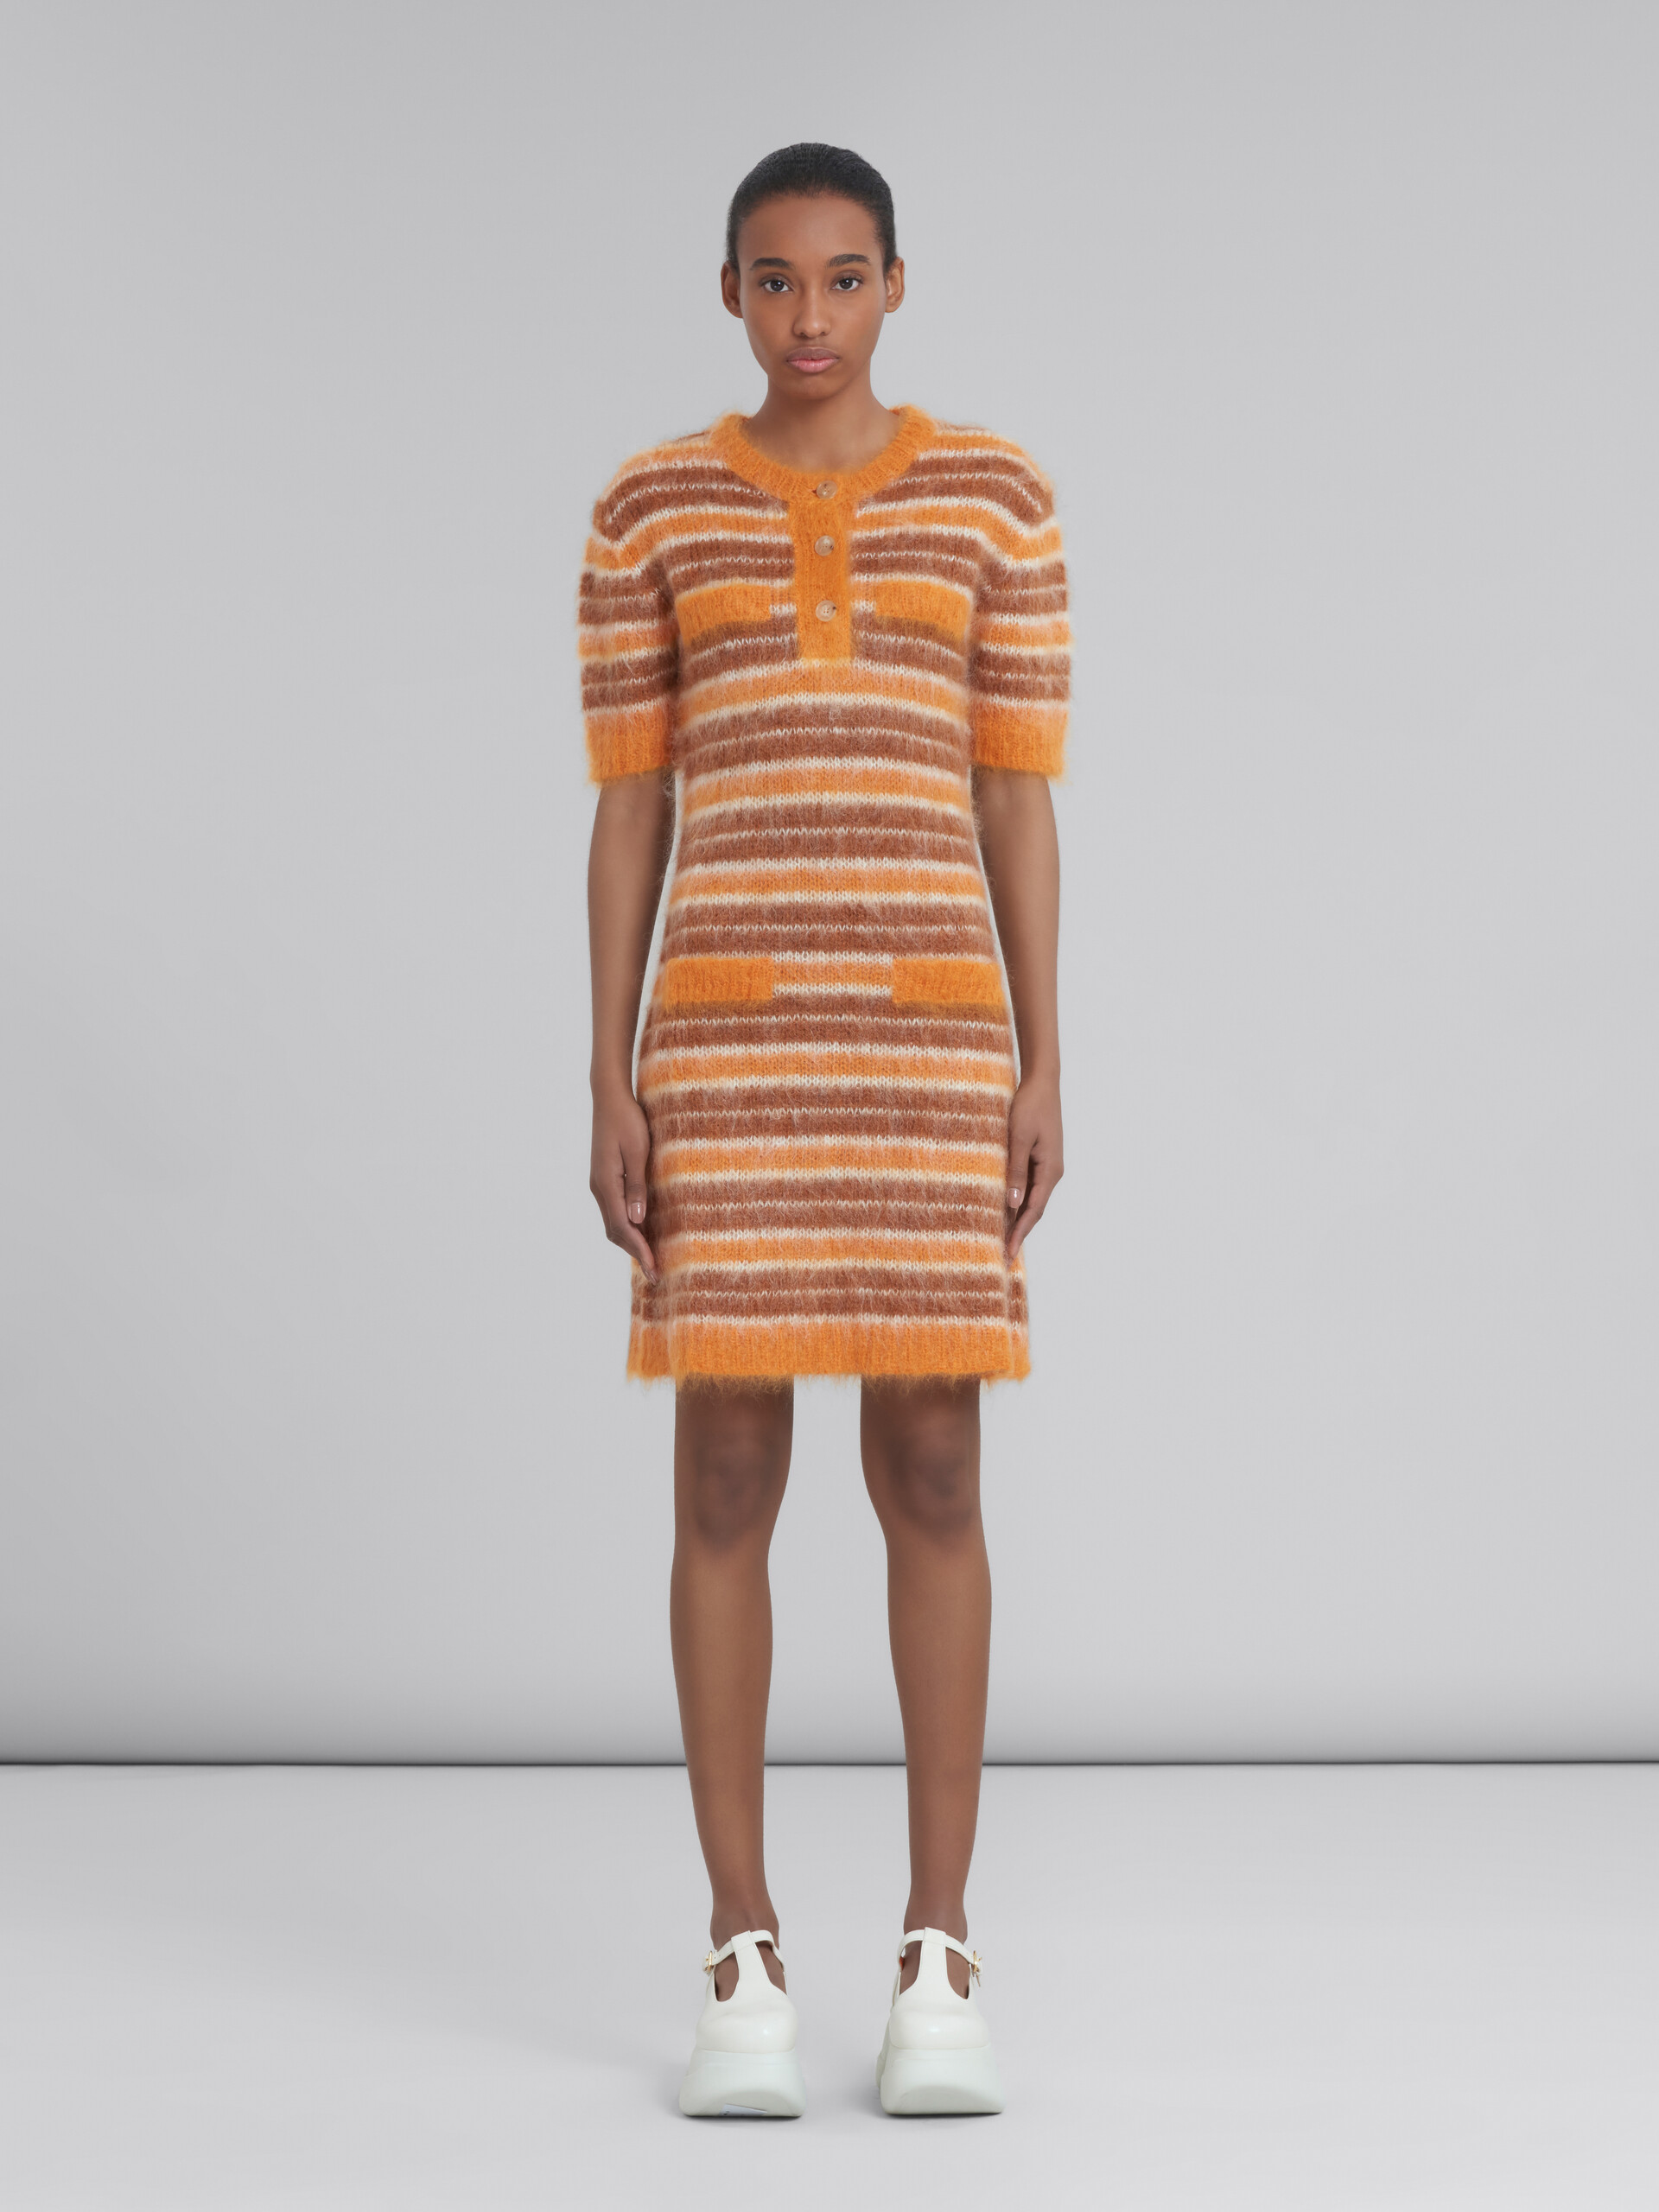 Mohair dress with orange stripes - Dresses - Image 2